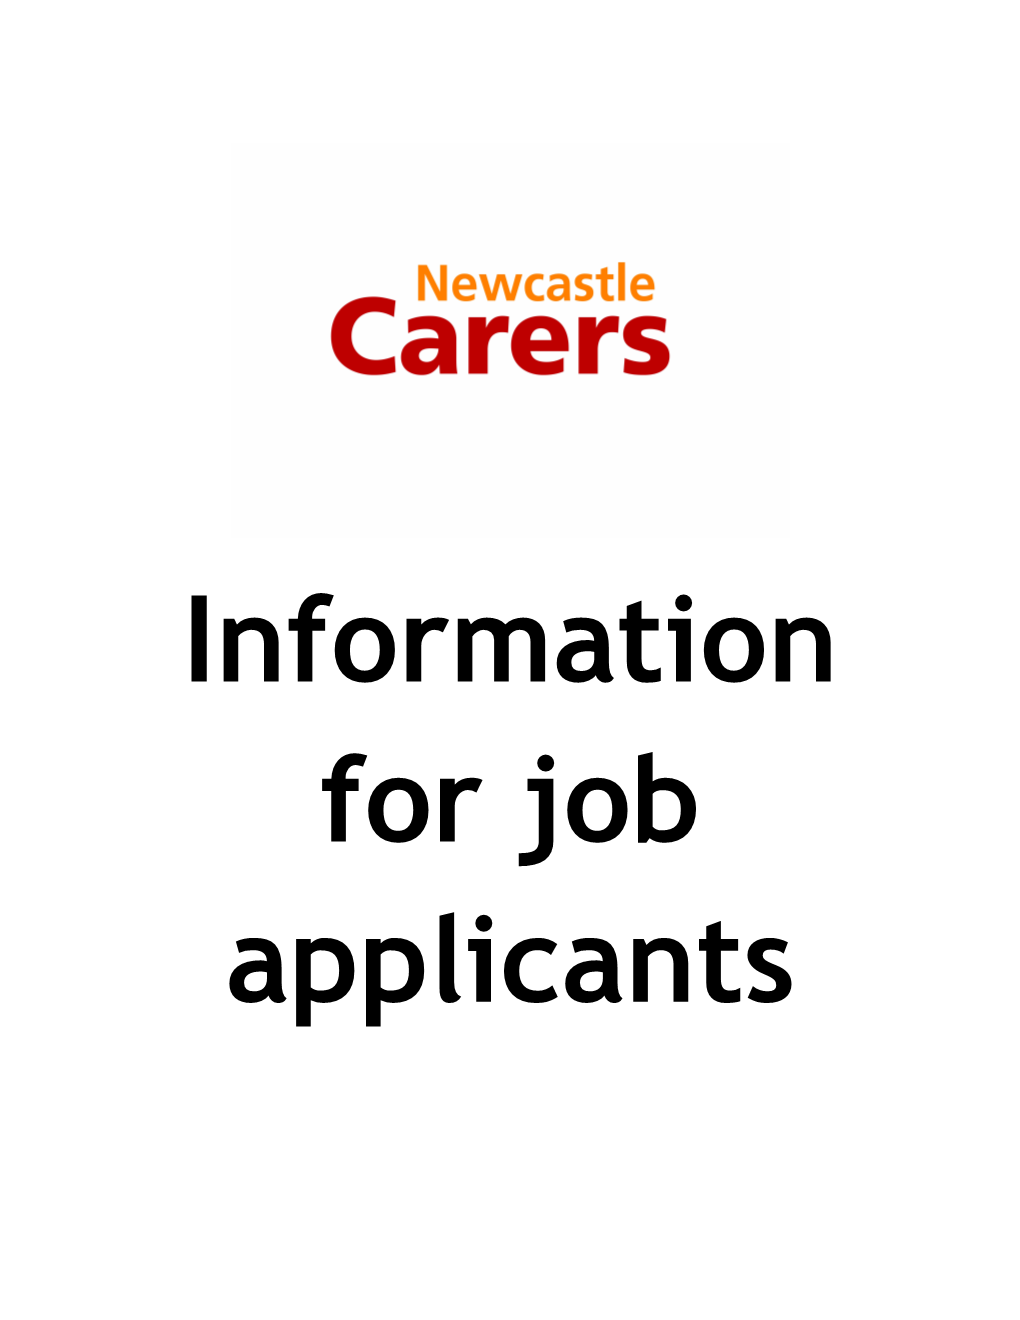 Information for Job Applicants